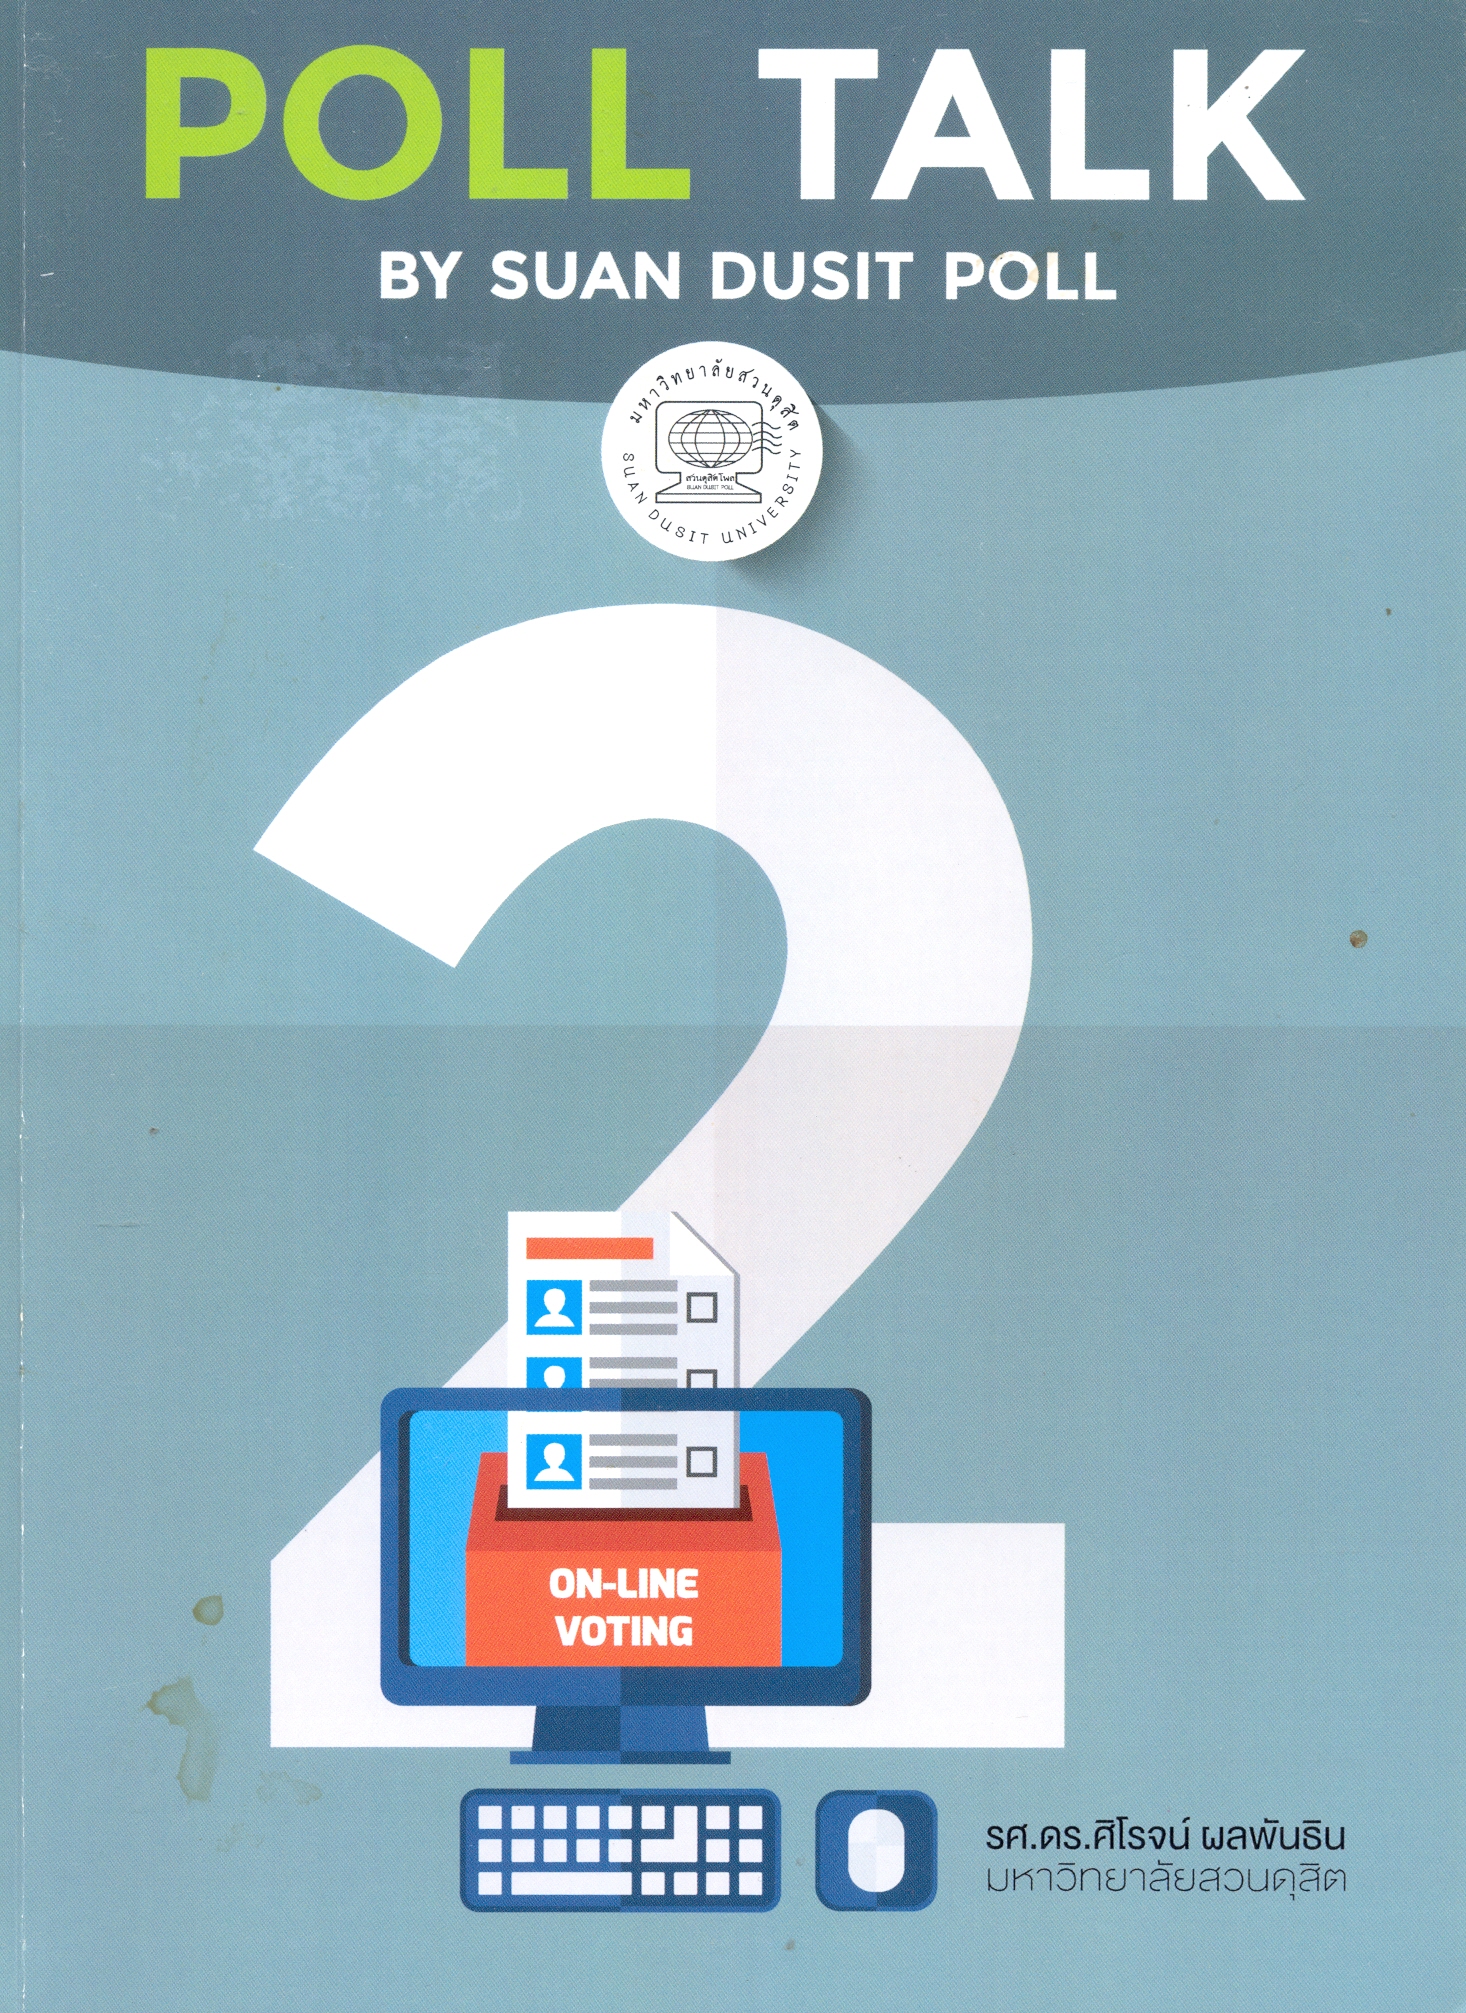 Poll talk by Suan Dusit poll